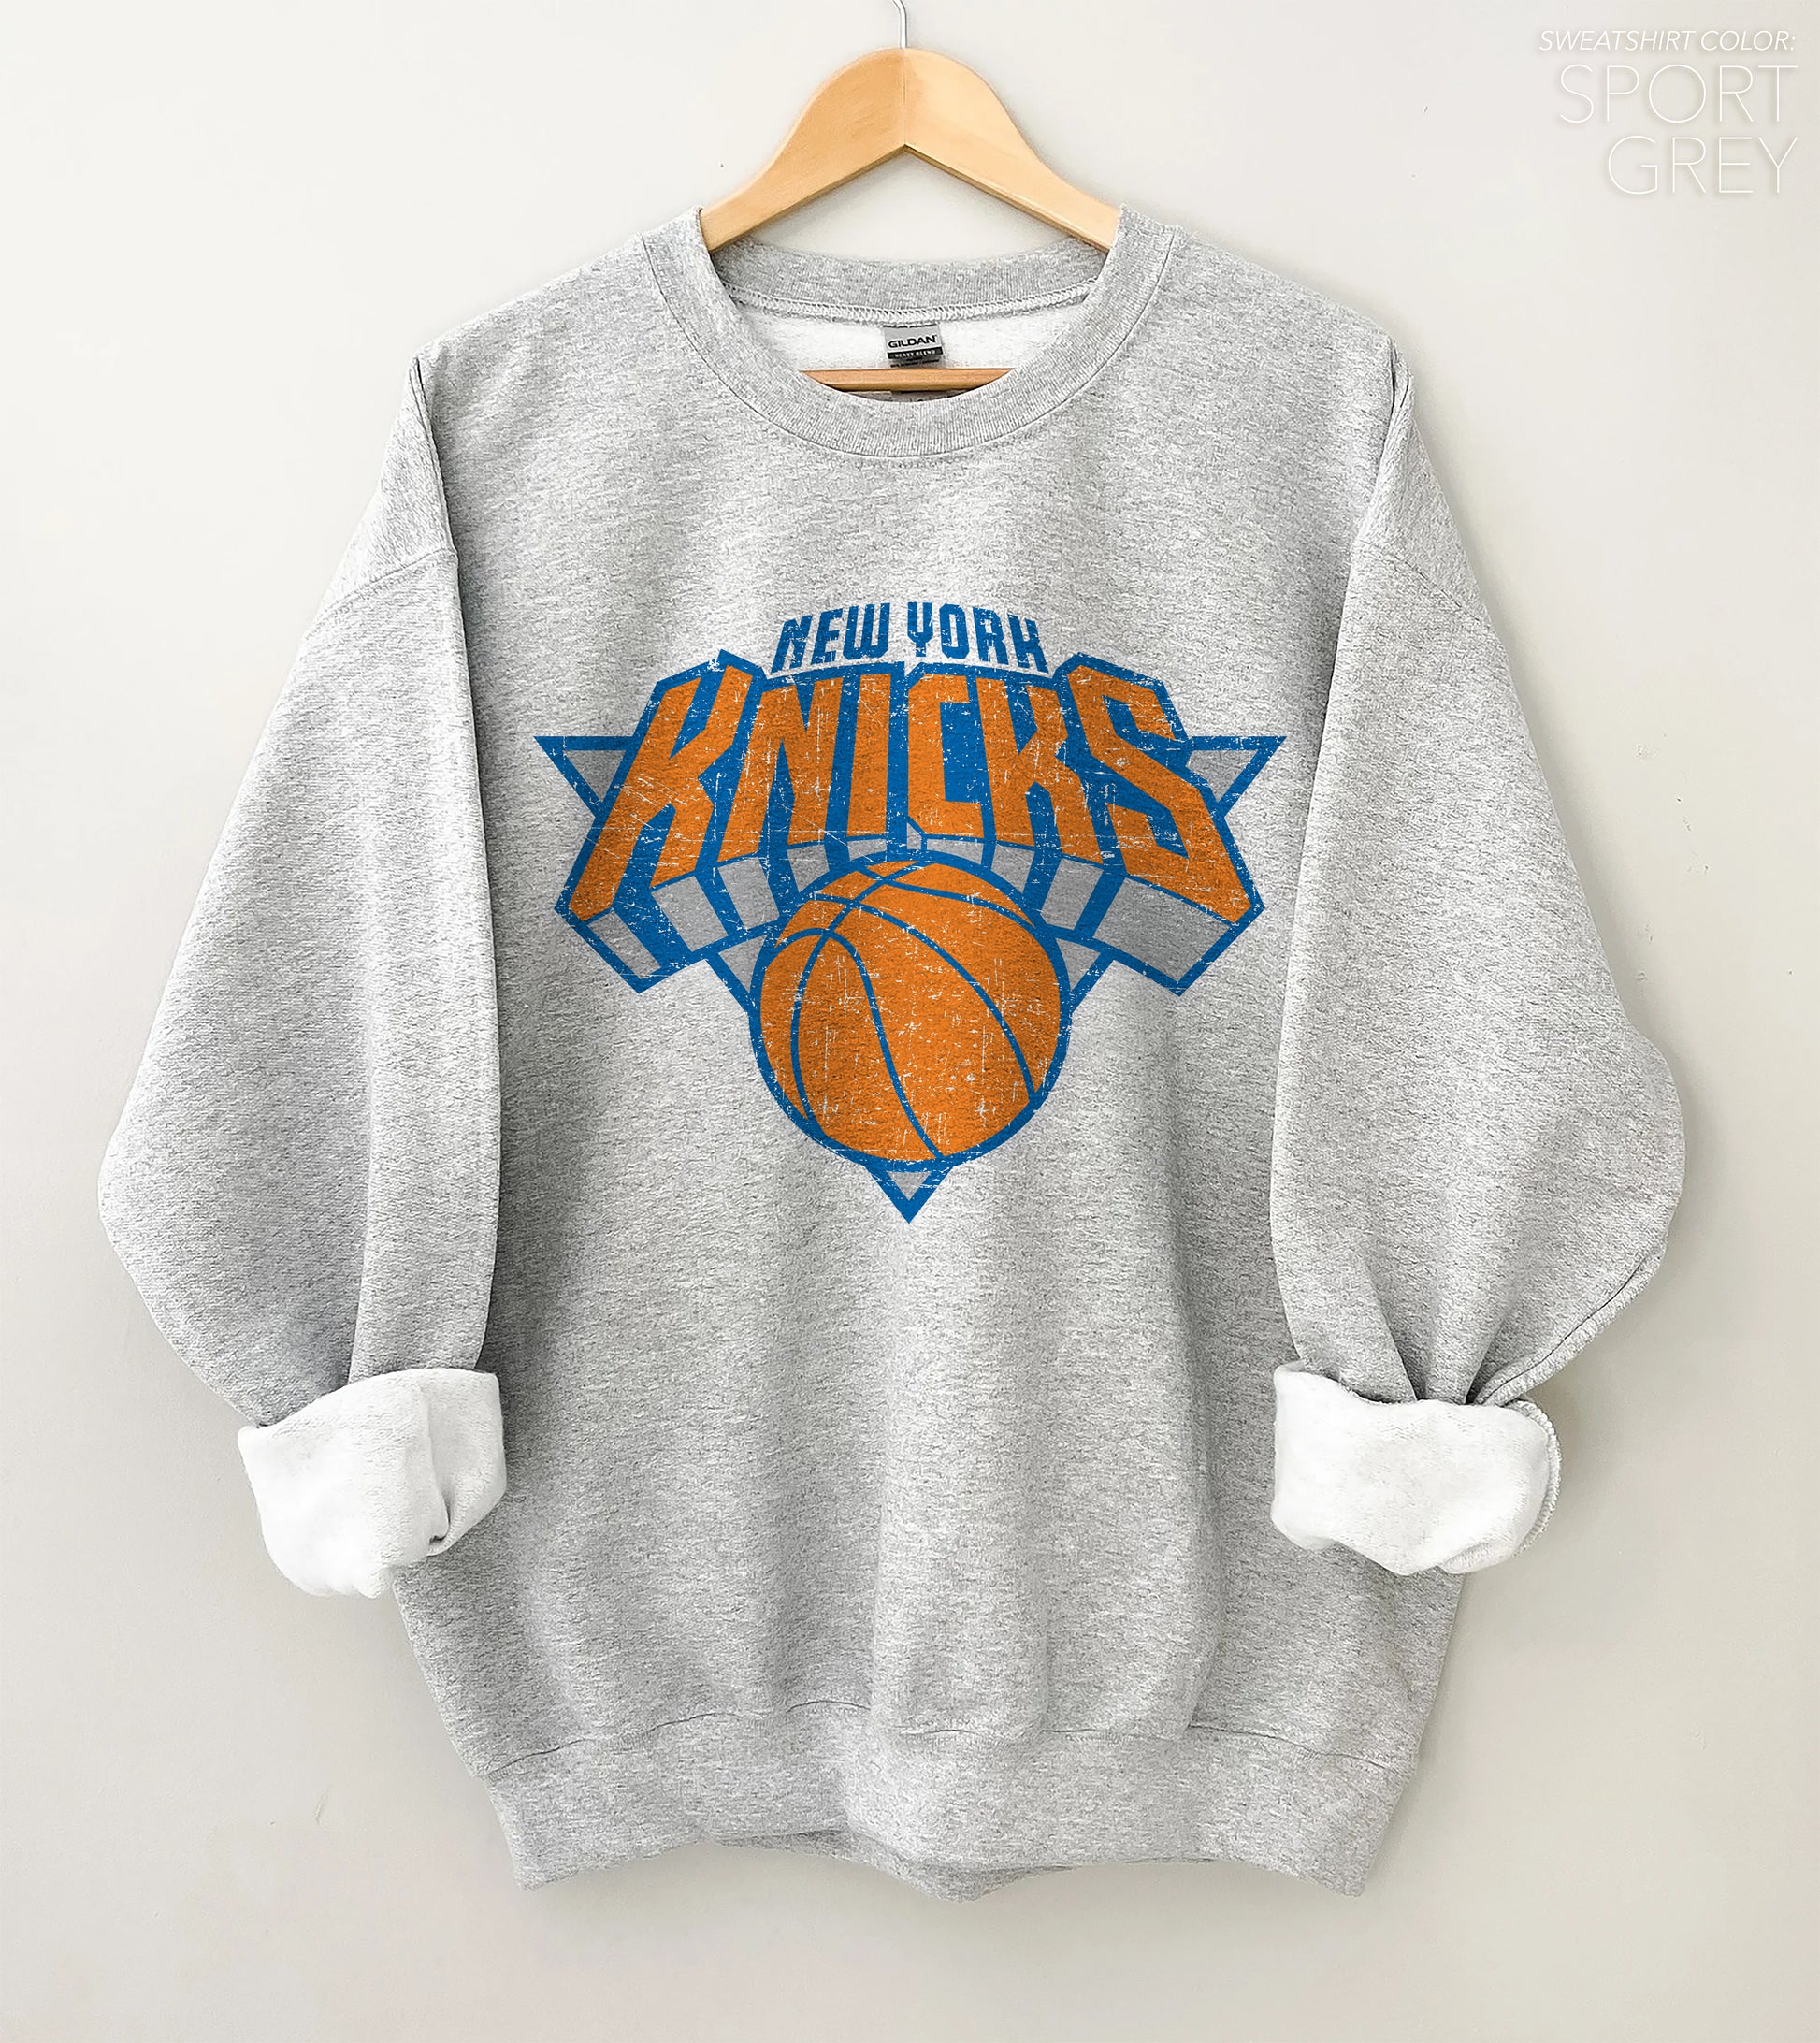 Vintage Champion New York Knicks sweatshirt  Sweatshirts, New york knicks,  Vintage champion